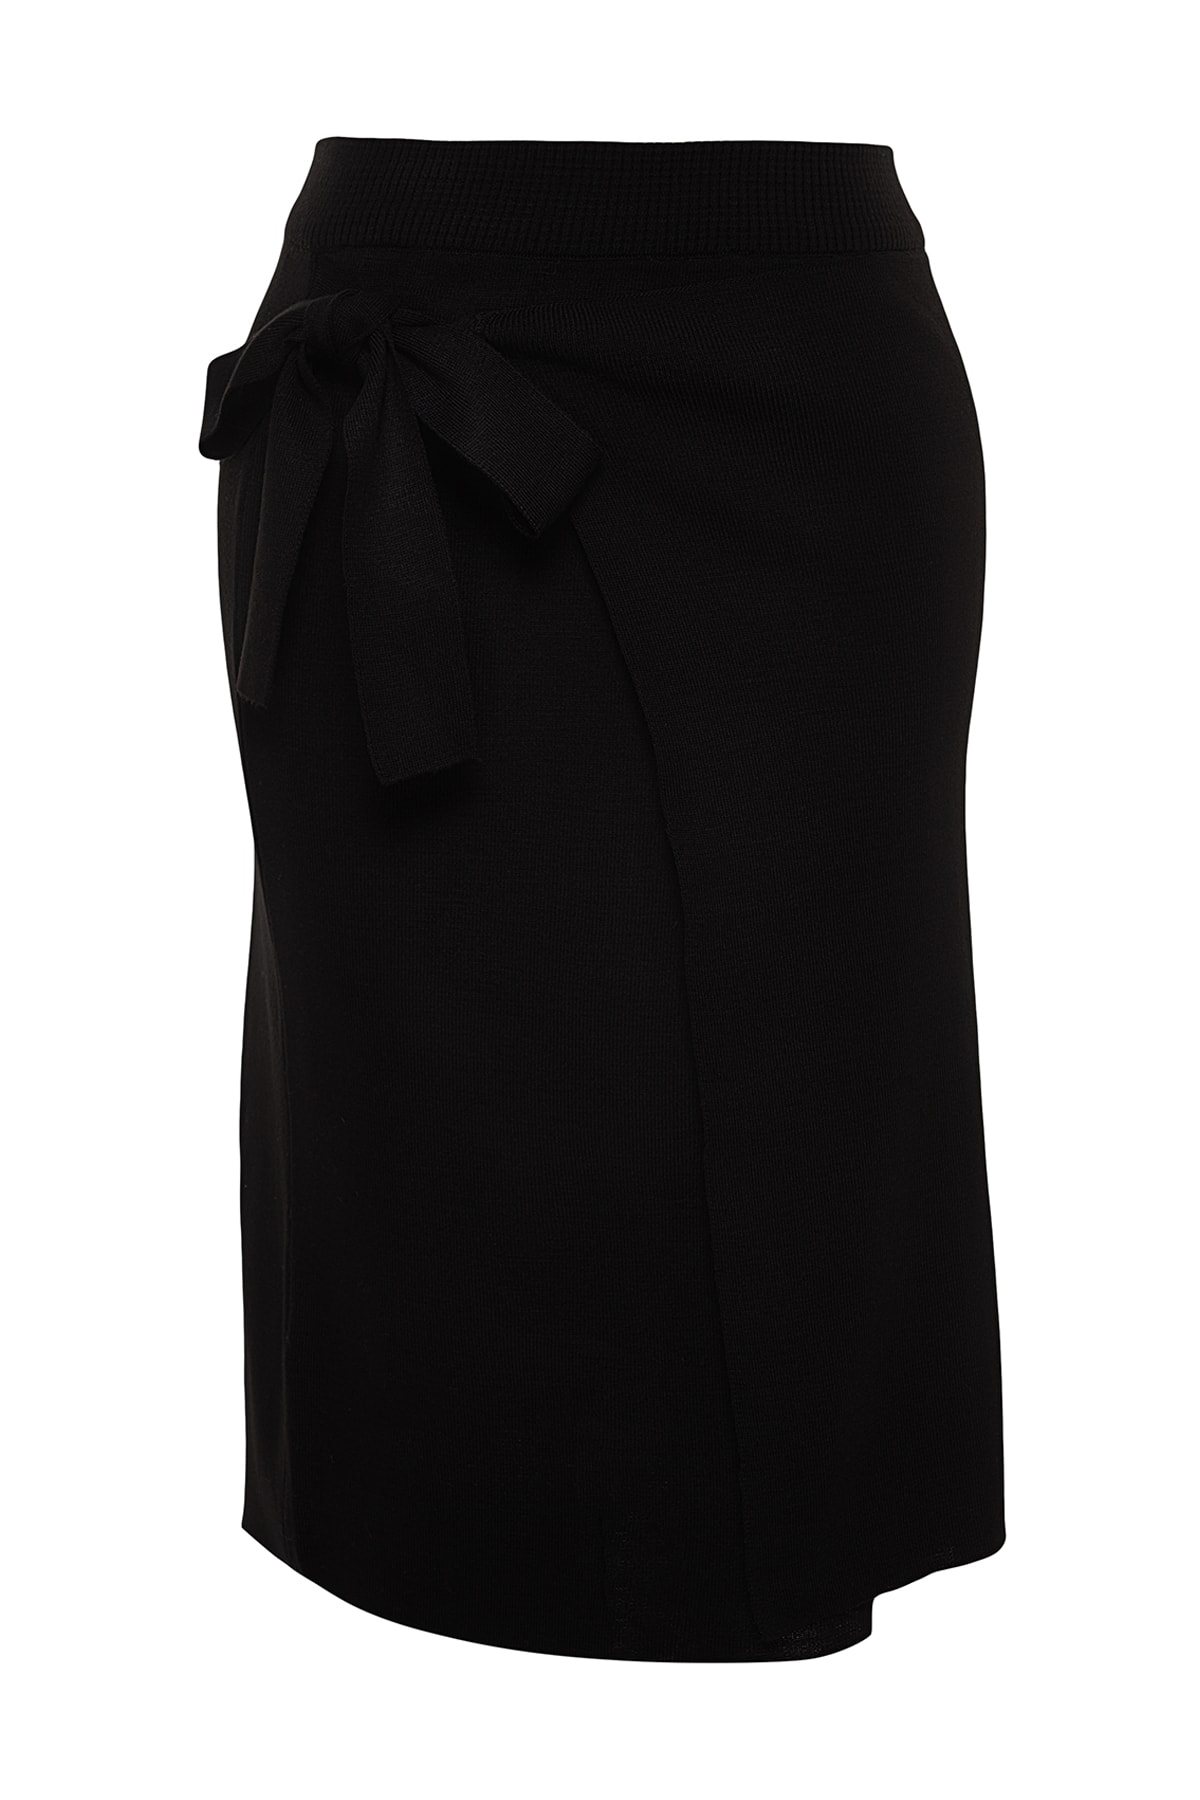 Trendyol Curve Black Front Detailed Knitwear Skirt